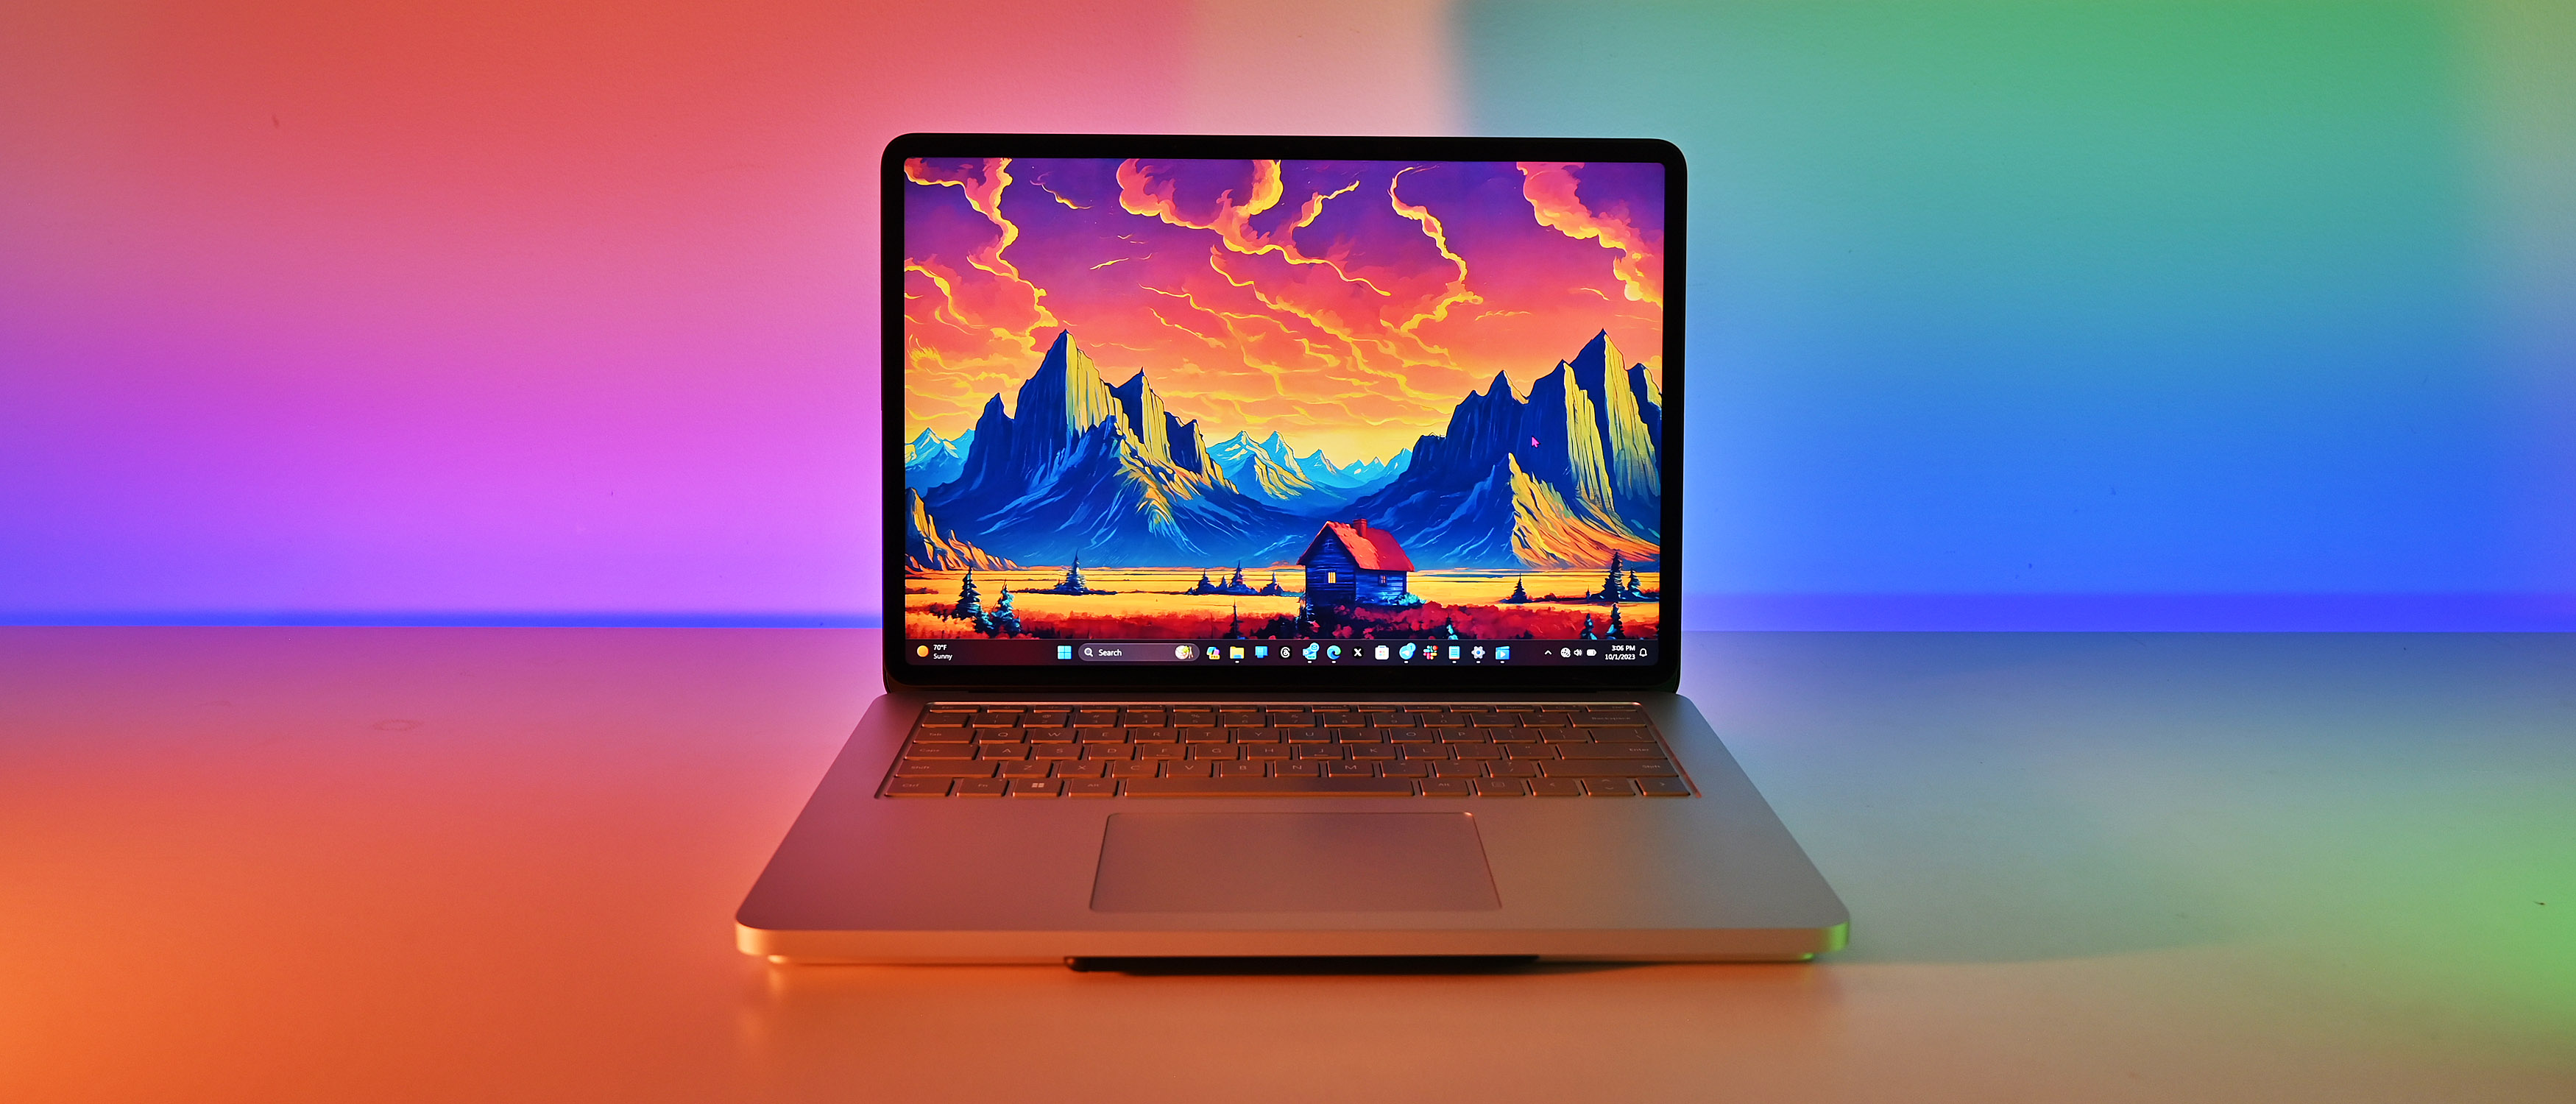 Microsoft Surface Laptop 2 (2018) Review: Impressive Features, Design